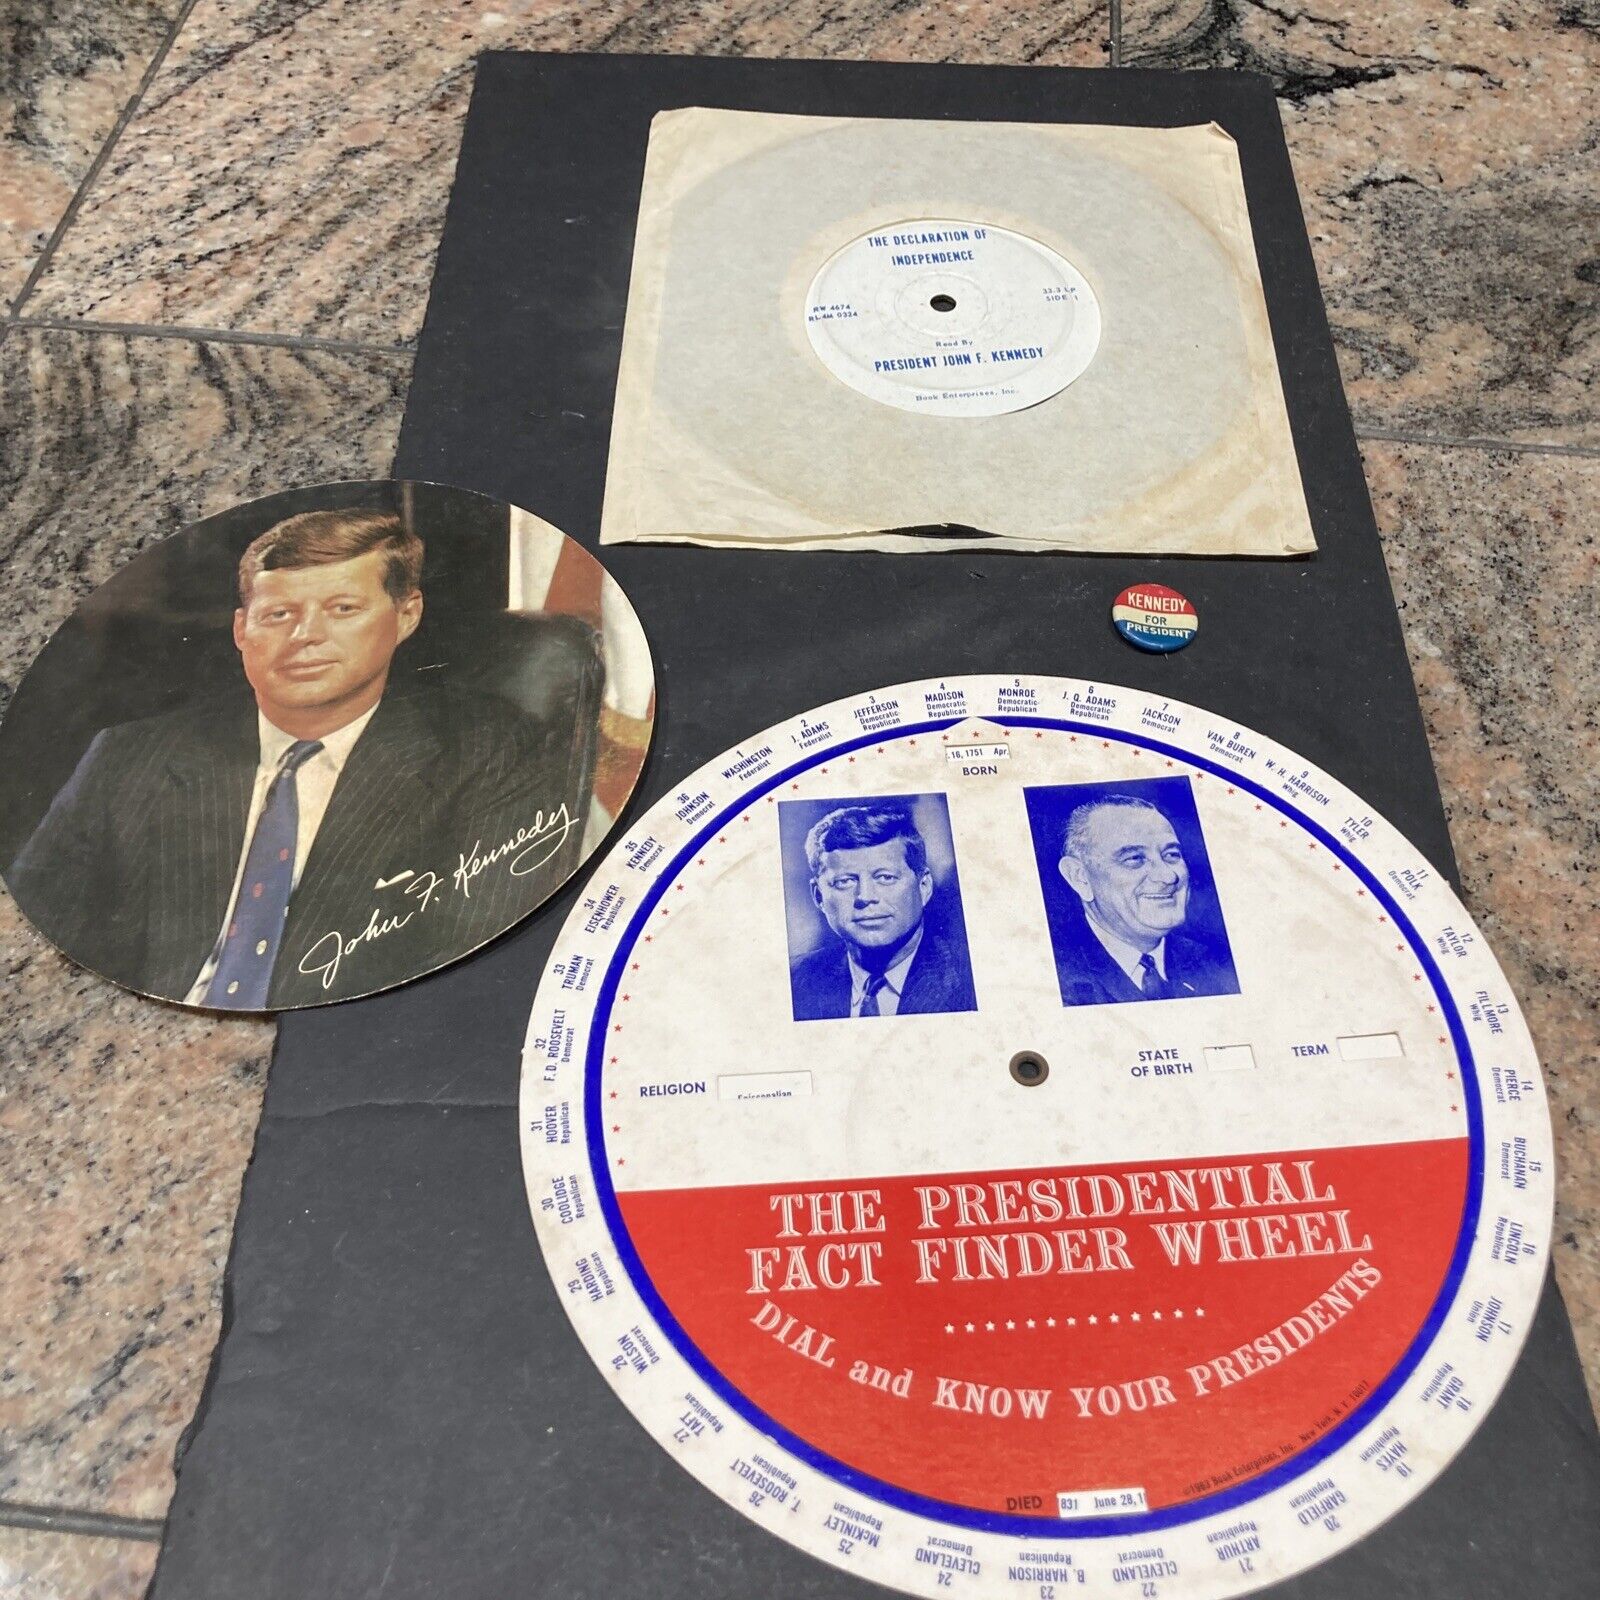 vintage lot of 4 John F. Kennedy souvenirs 